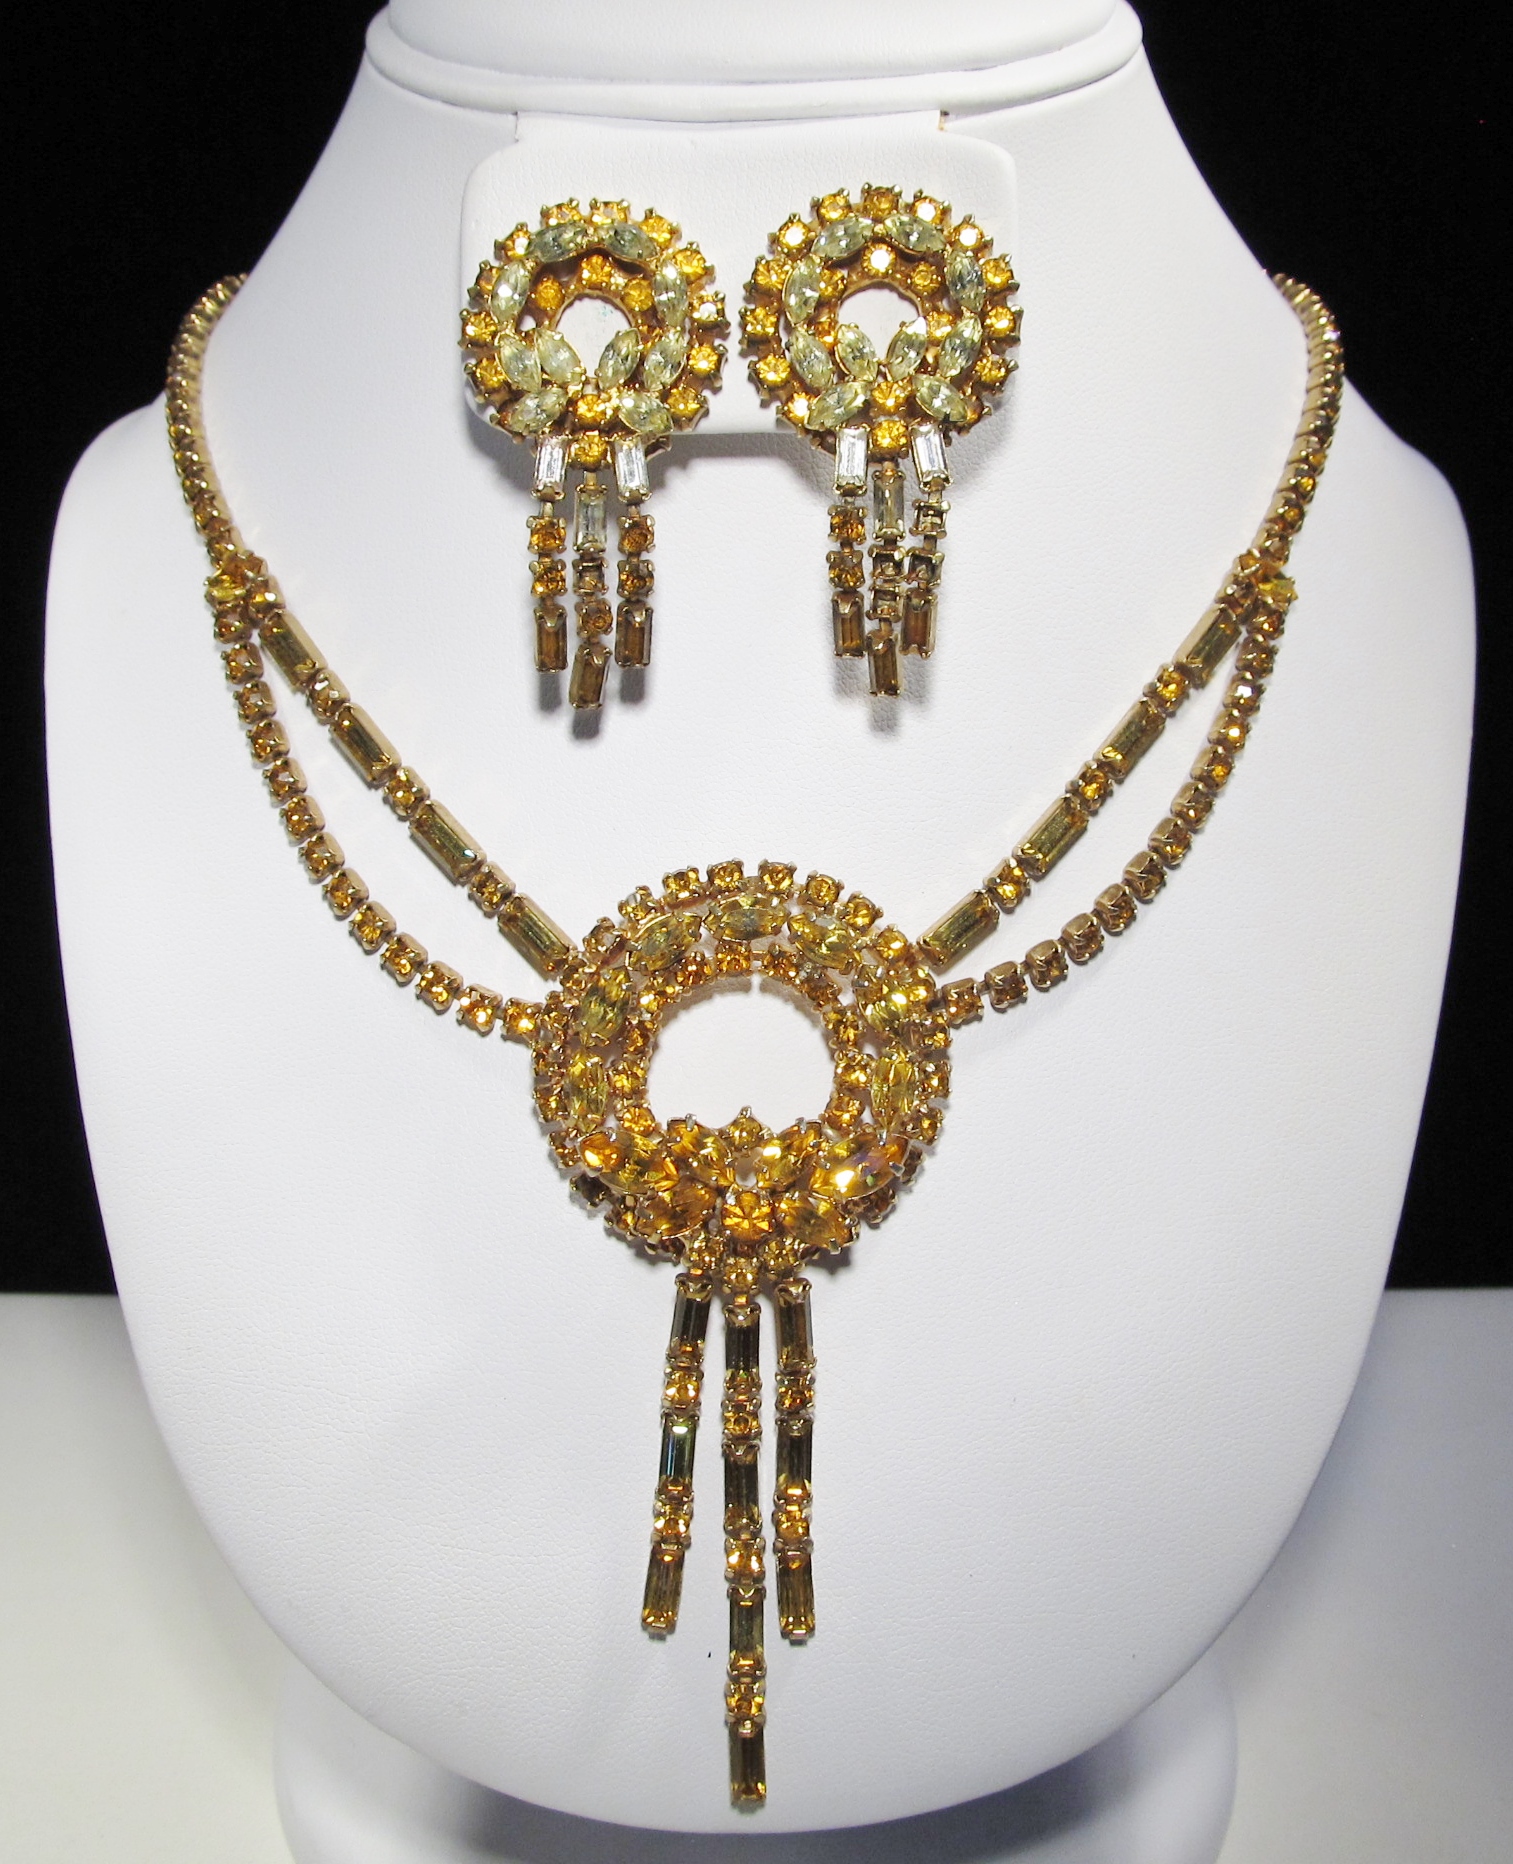 Amber & Yellow Rhinestone Necklace & Earrings Set WC-373 - $125.00